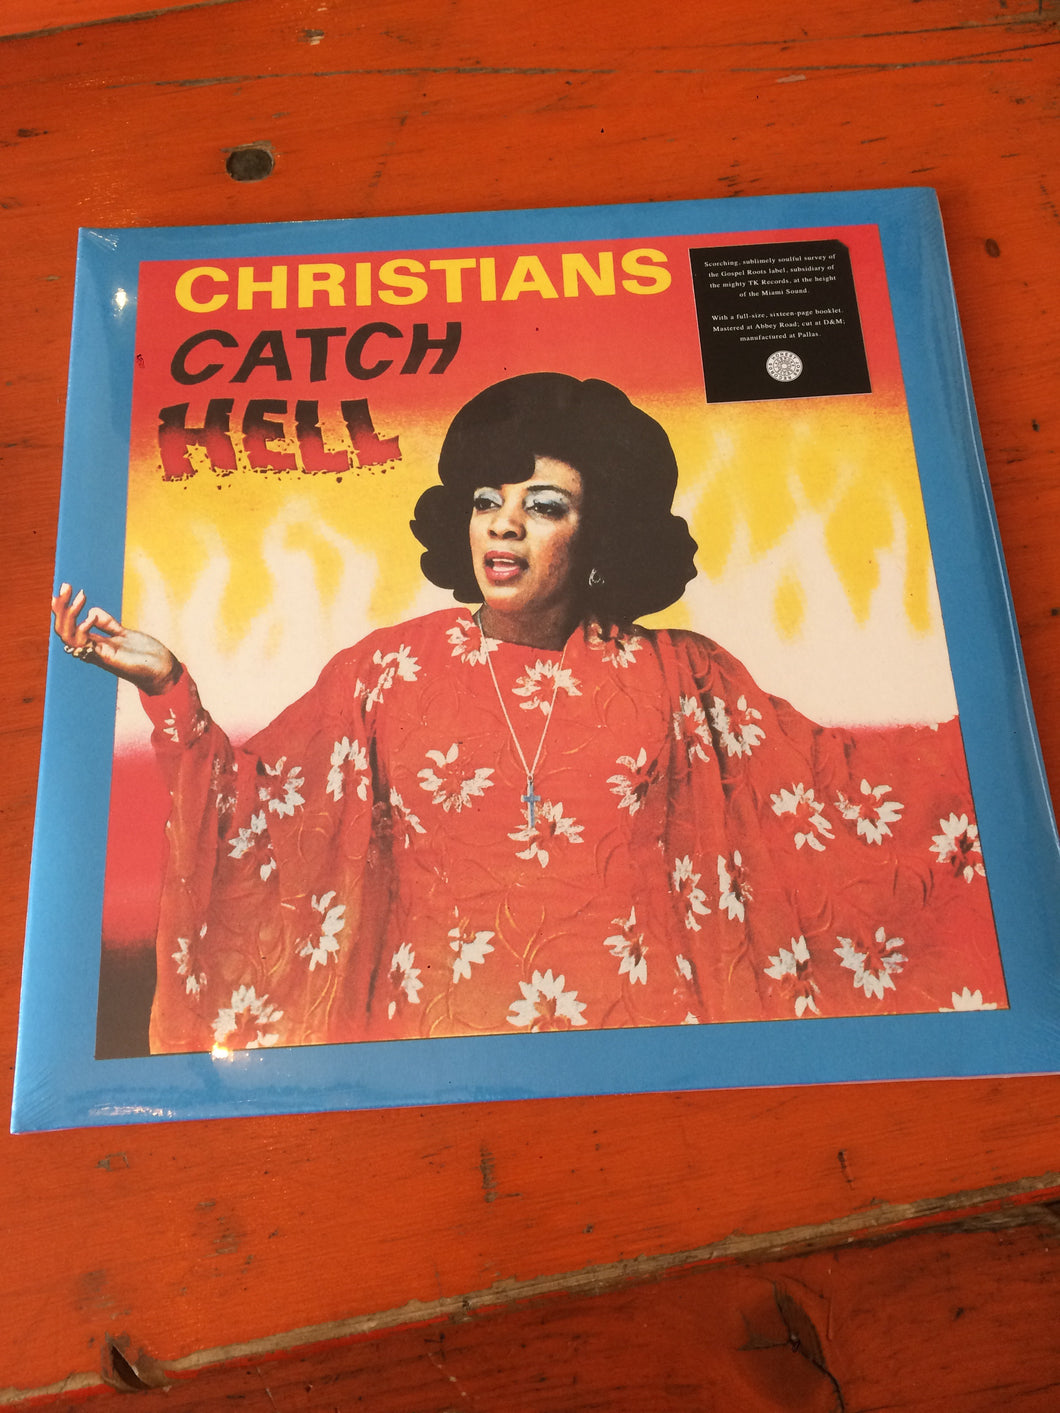 Christians Catch Hell - Gospel Roots 1976-79